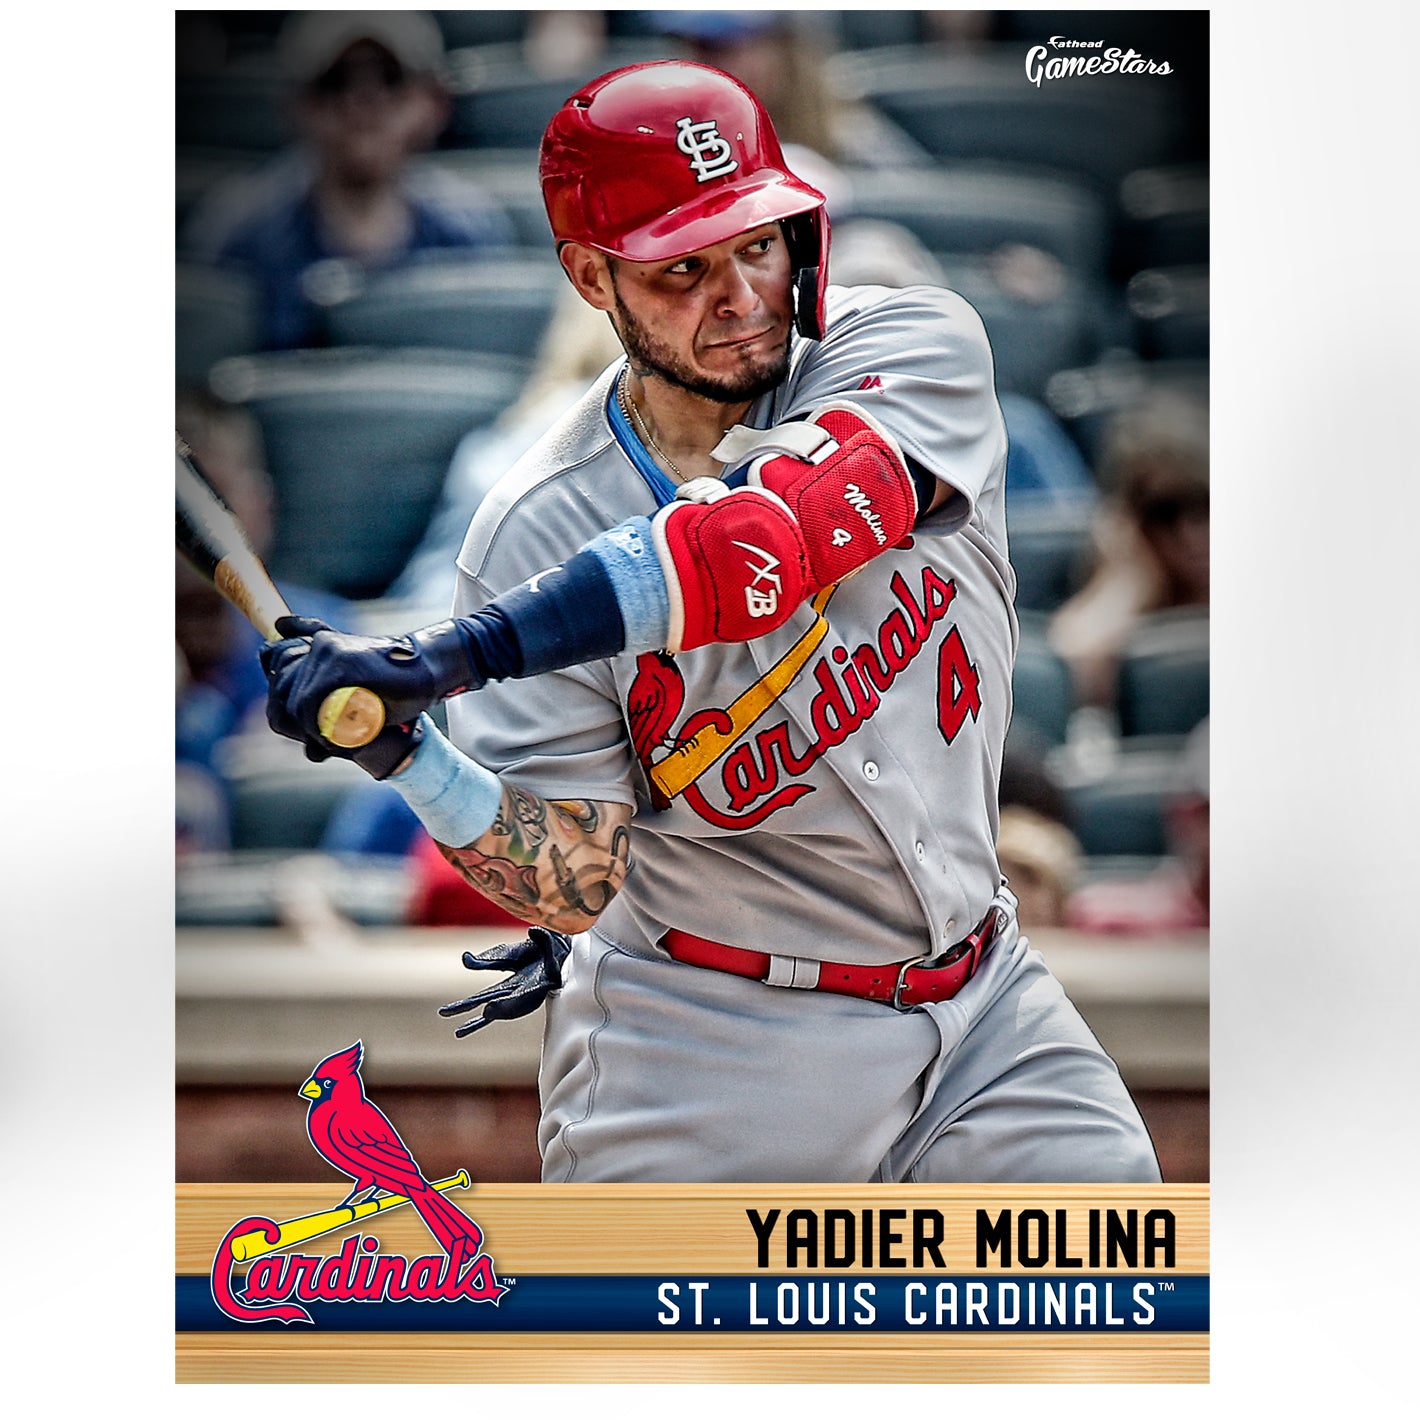 St. Louis Cardinals for St Louis Cardinals: Yadier Molina 2021 GameStar - MLB Removable Wall Adhesive Wall Decal Large